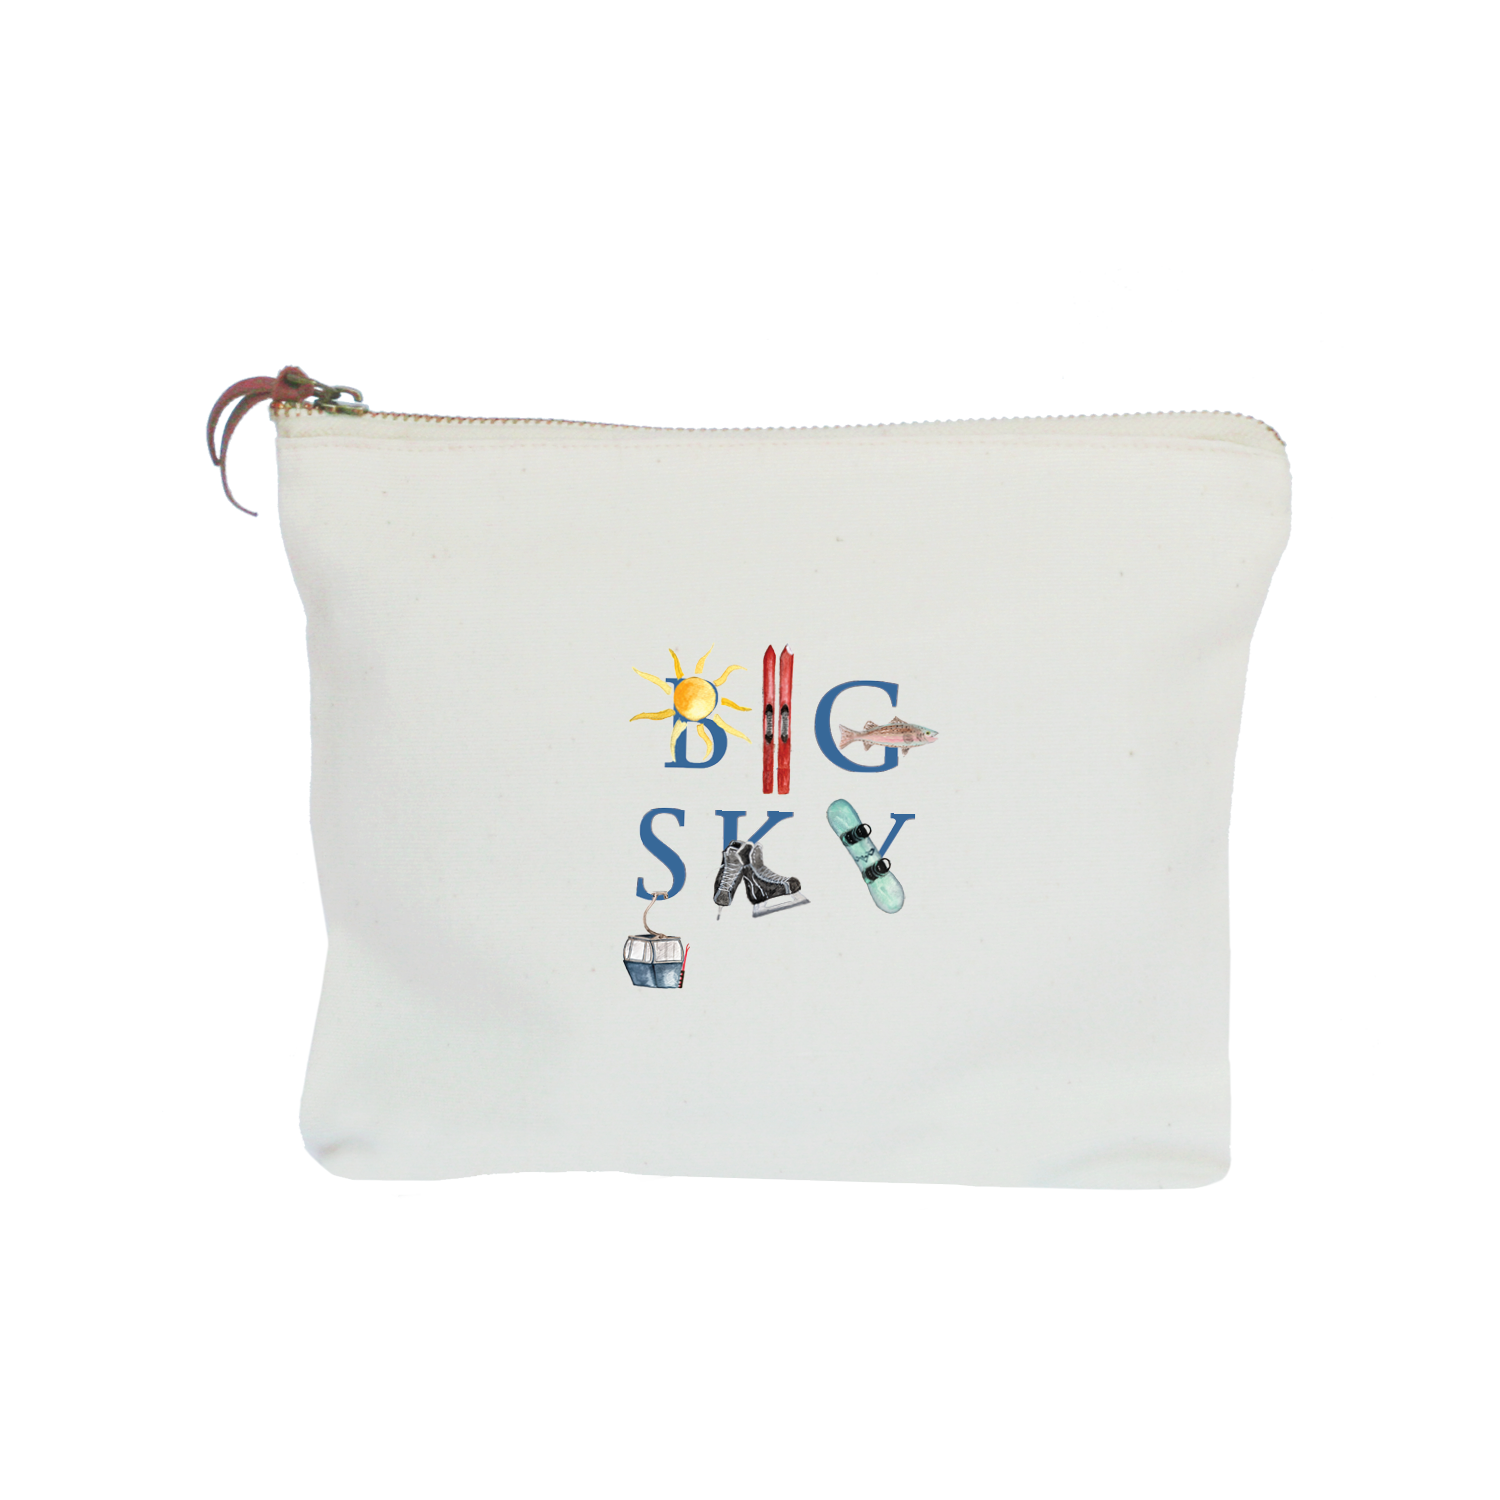 Big Sky zipper pouch